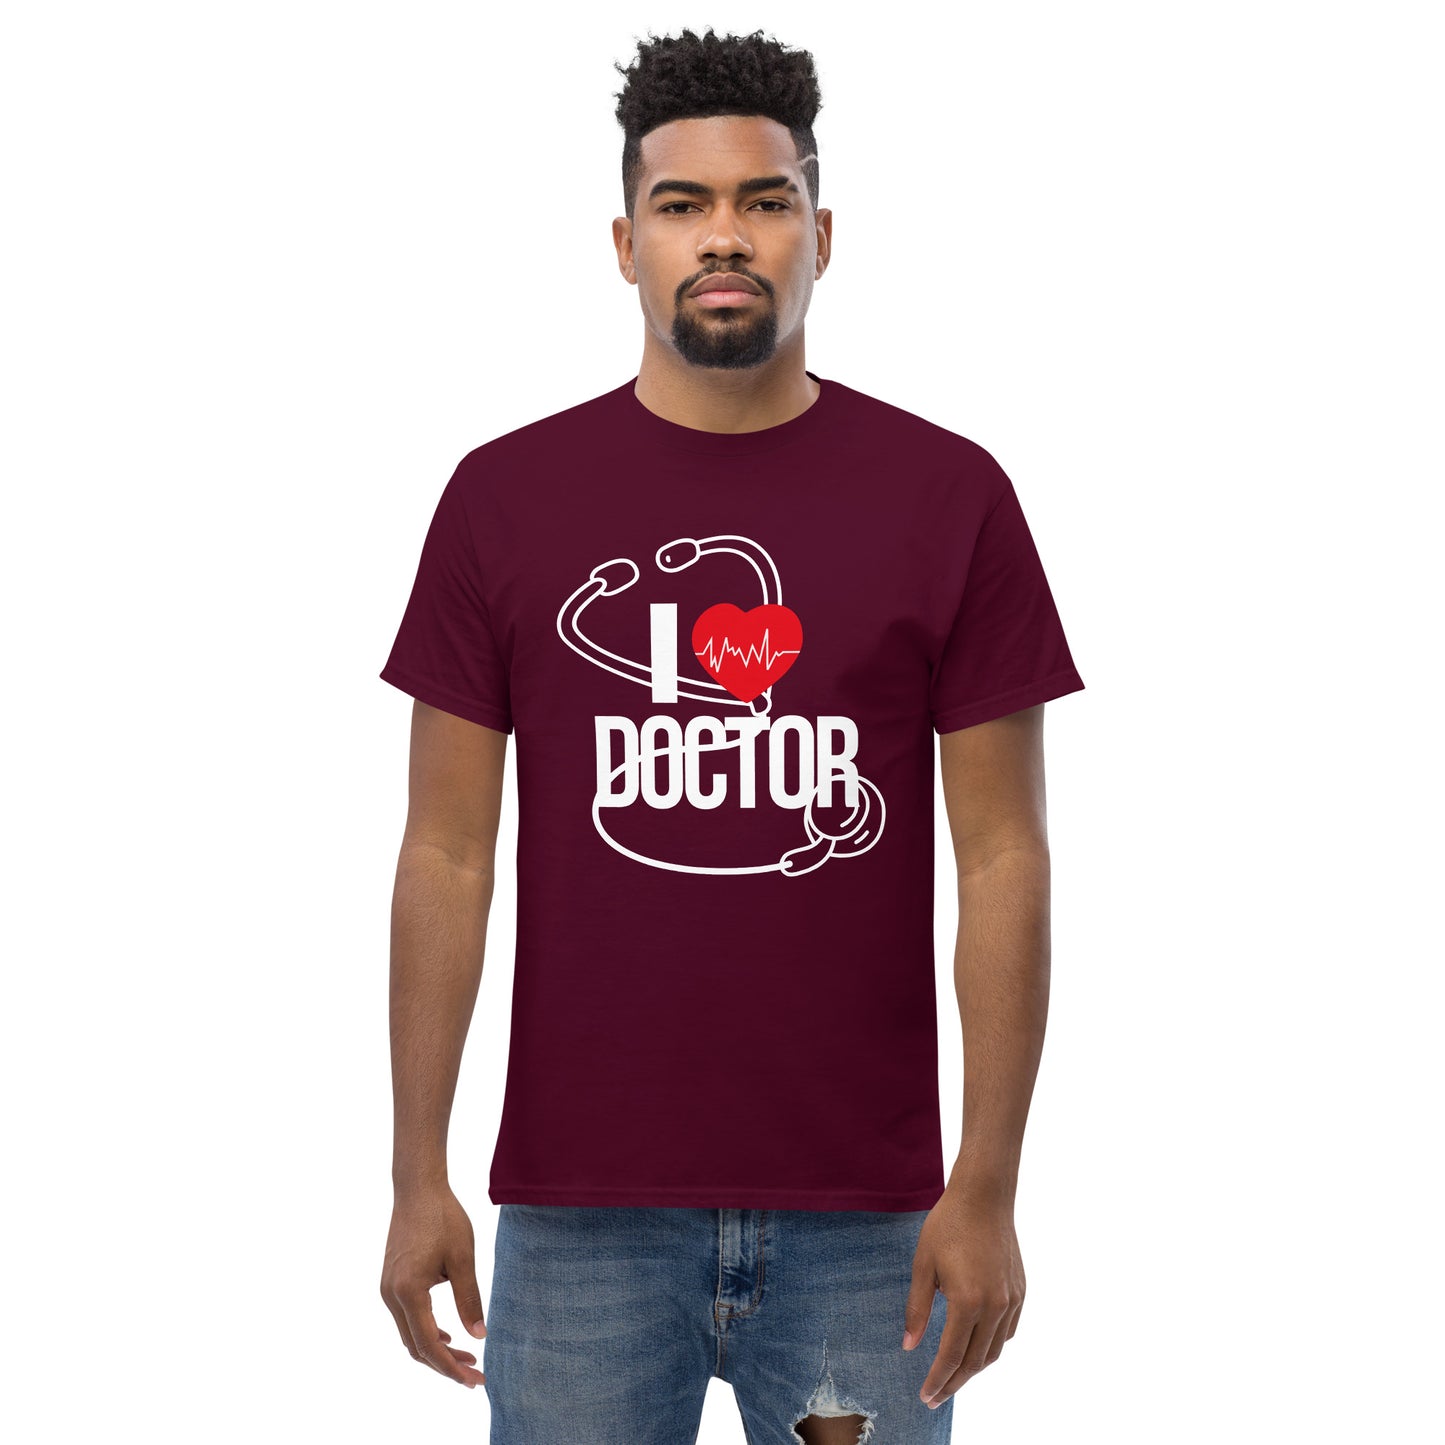 Great Doctor Tee